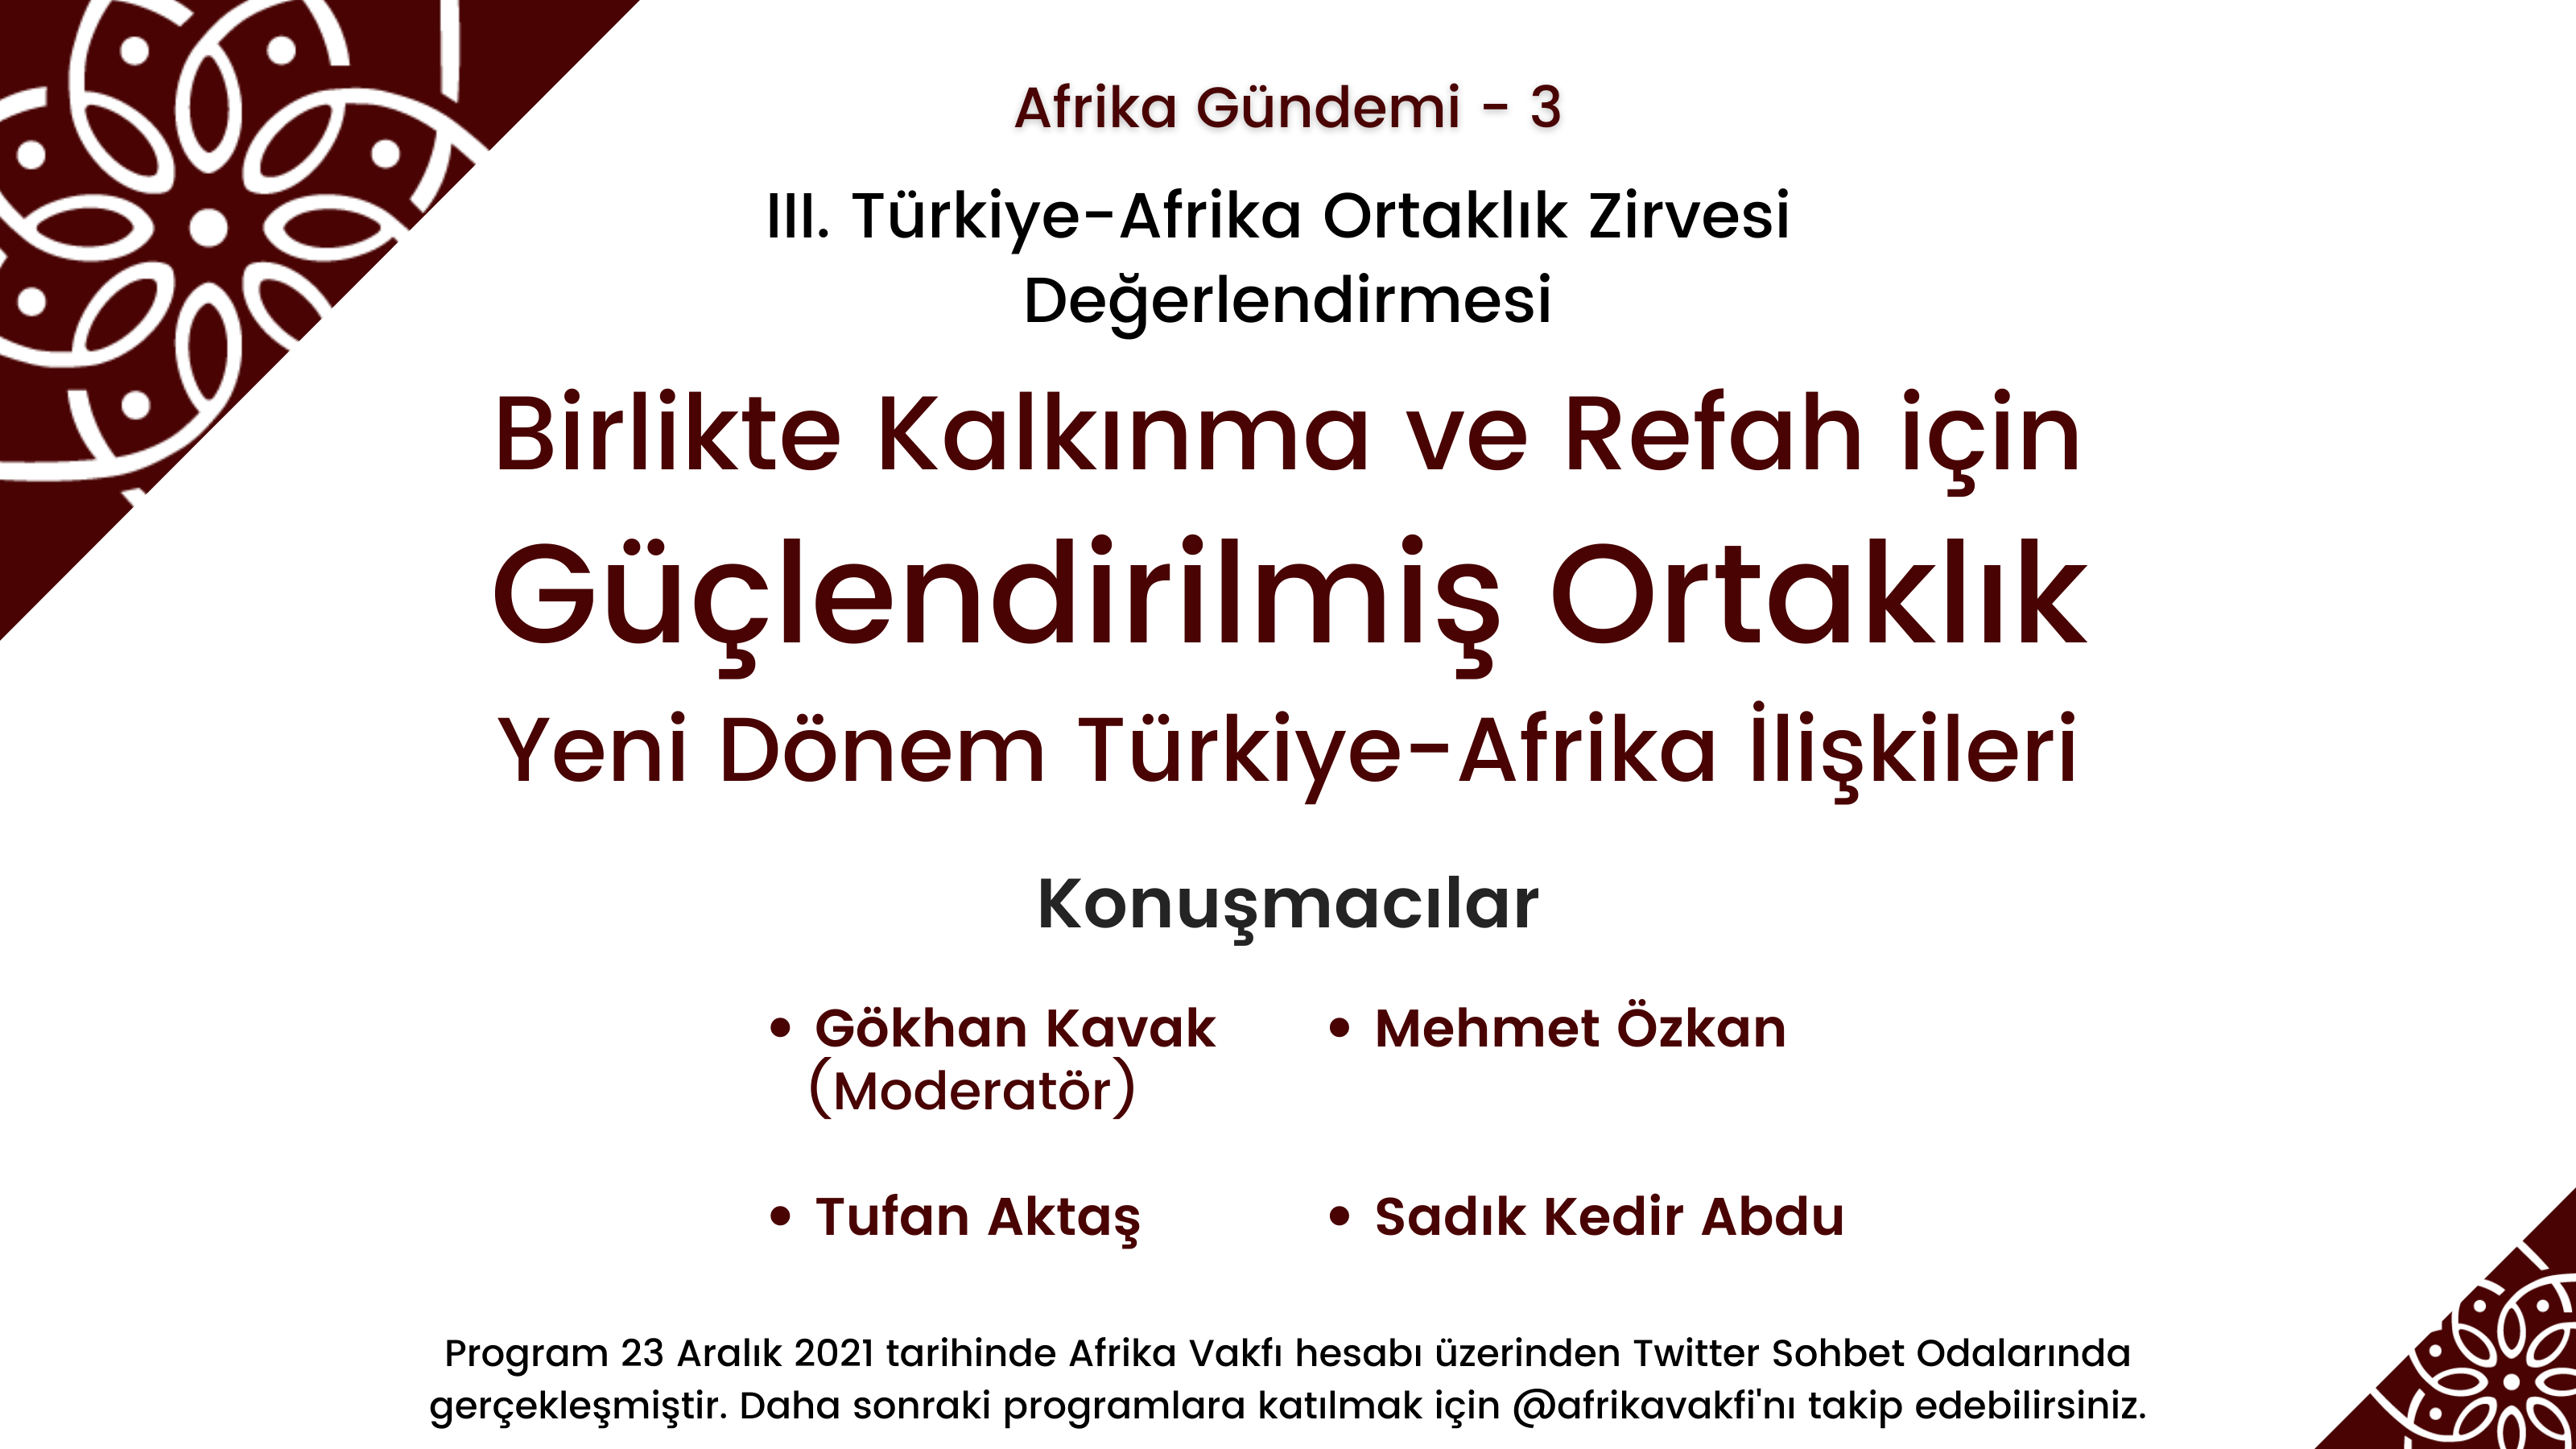 A New Era of Turkey-Africa Relations – Africa Agenda 3